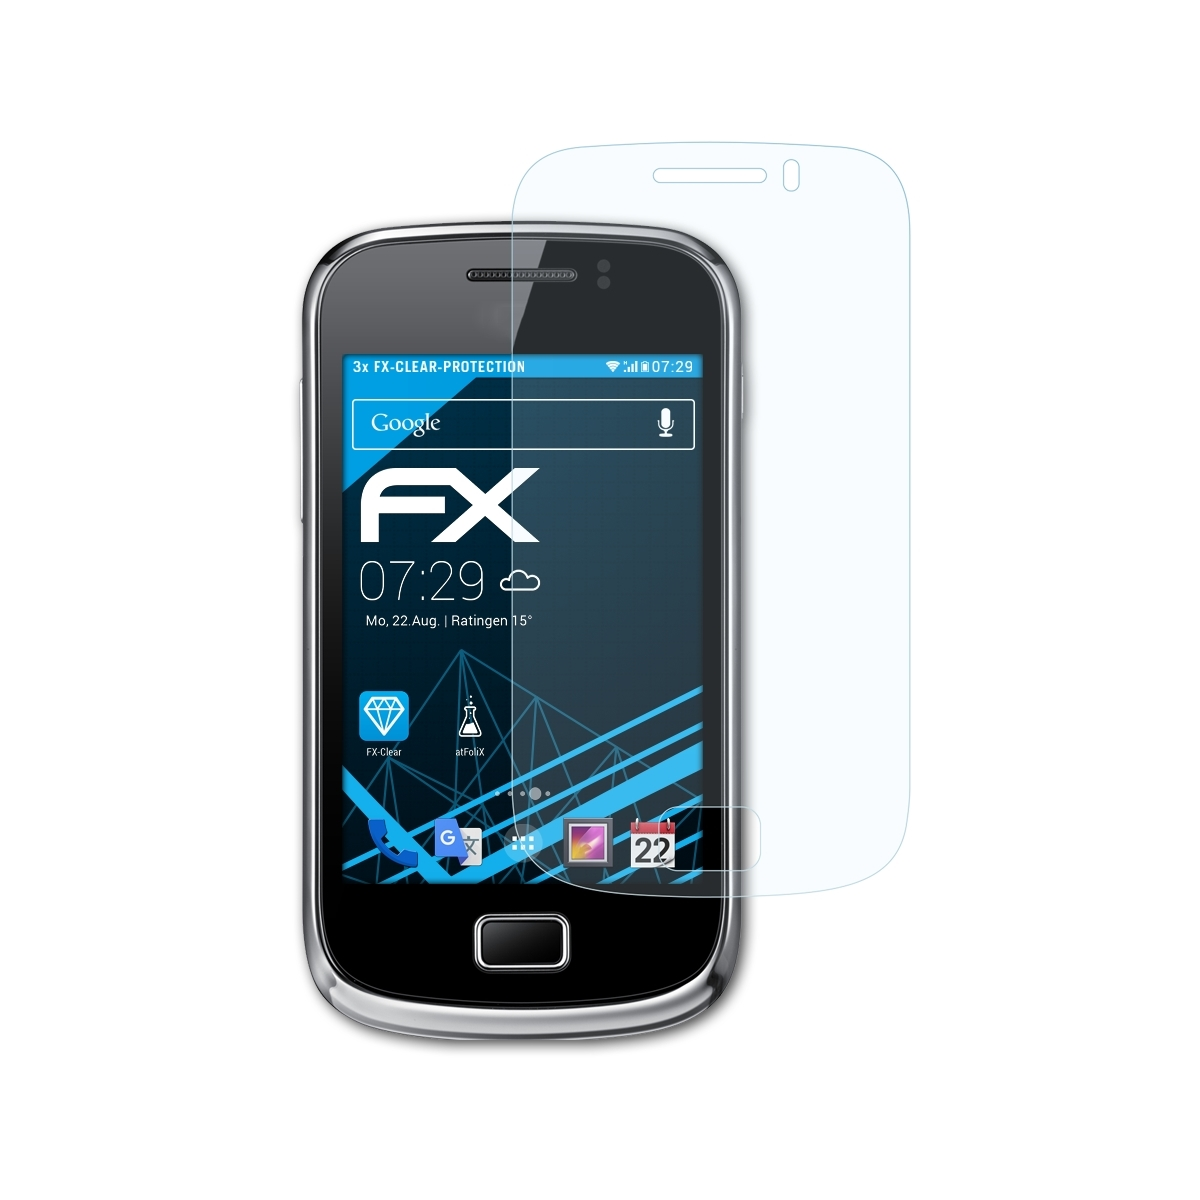 FX-Clear Displayschutz(für 3x Galaxy (GT-S6500)) 2 ATFOLIX Samsung mini